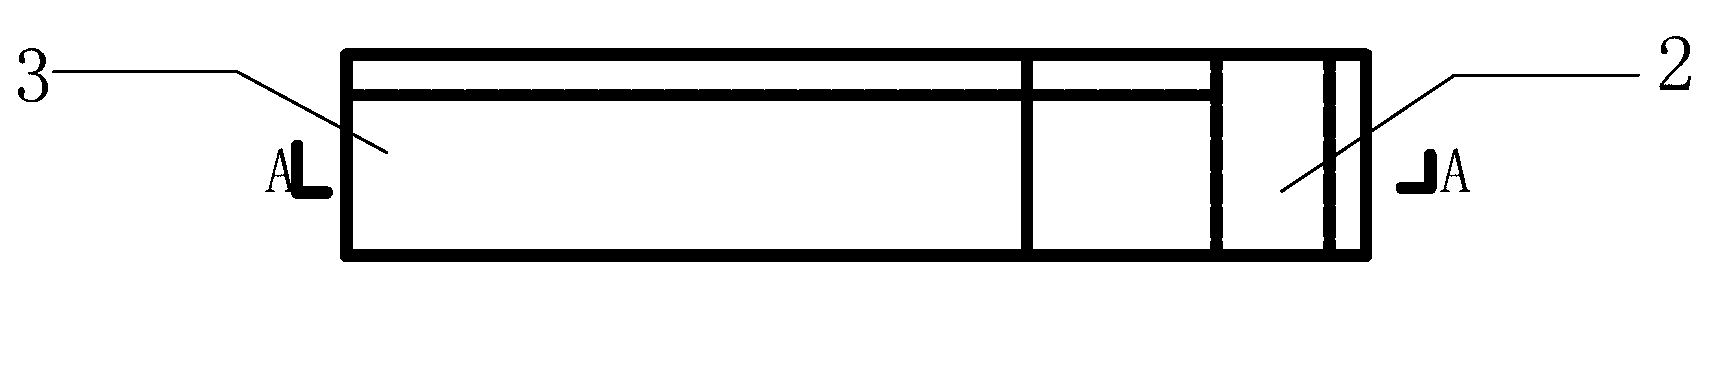 Simple aerial work platform erection method